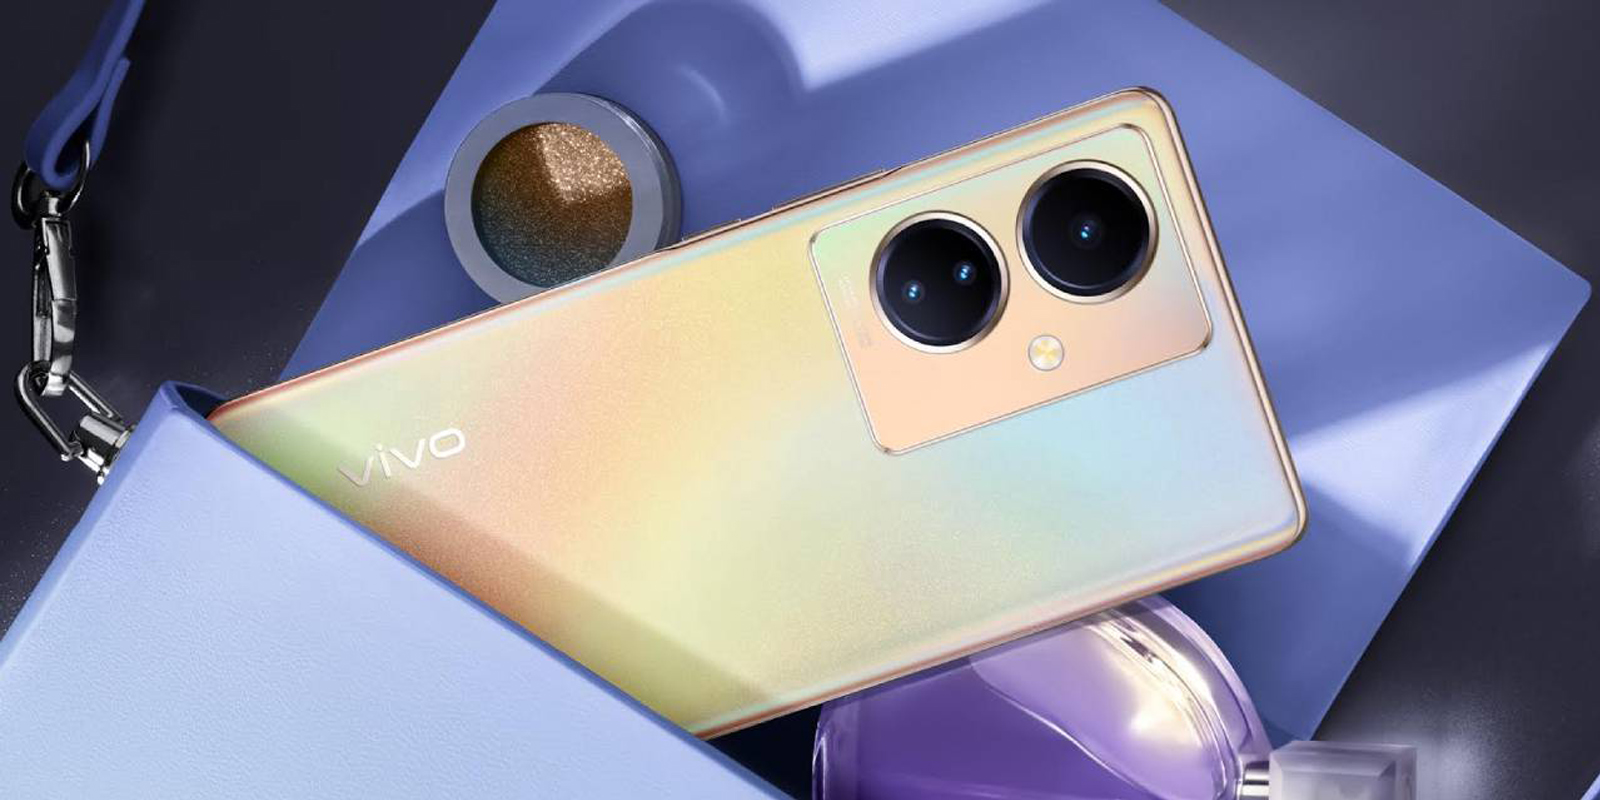 Price-performance-focused Vivo V30 revealed before launch!